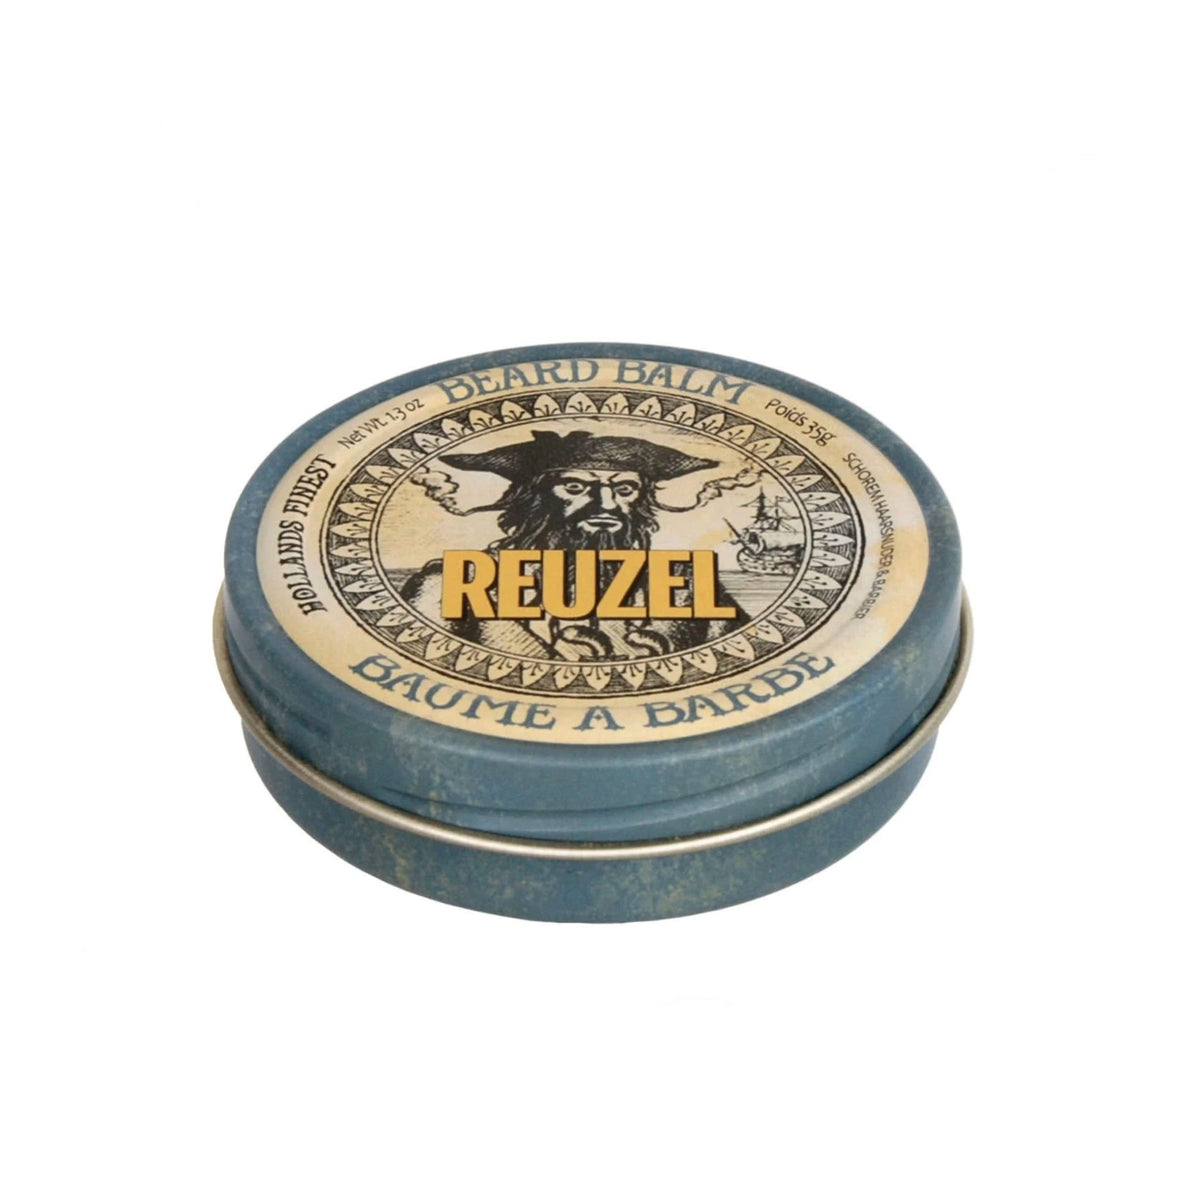 Reuzel Wood &amp; Spice Beard Balm 35g